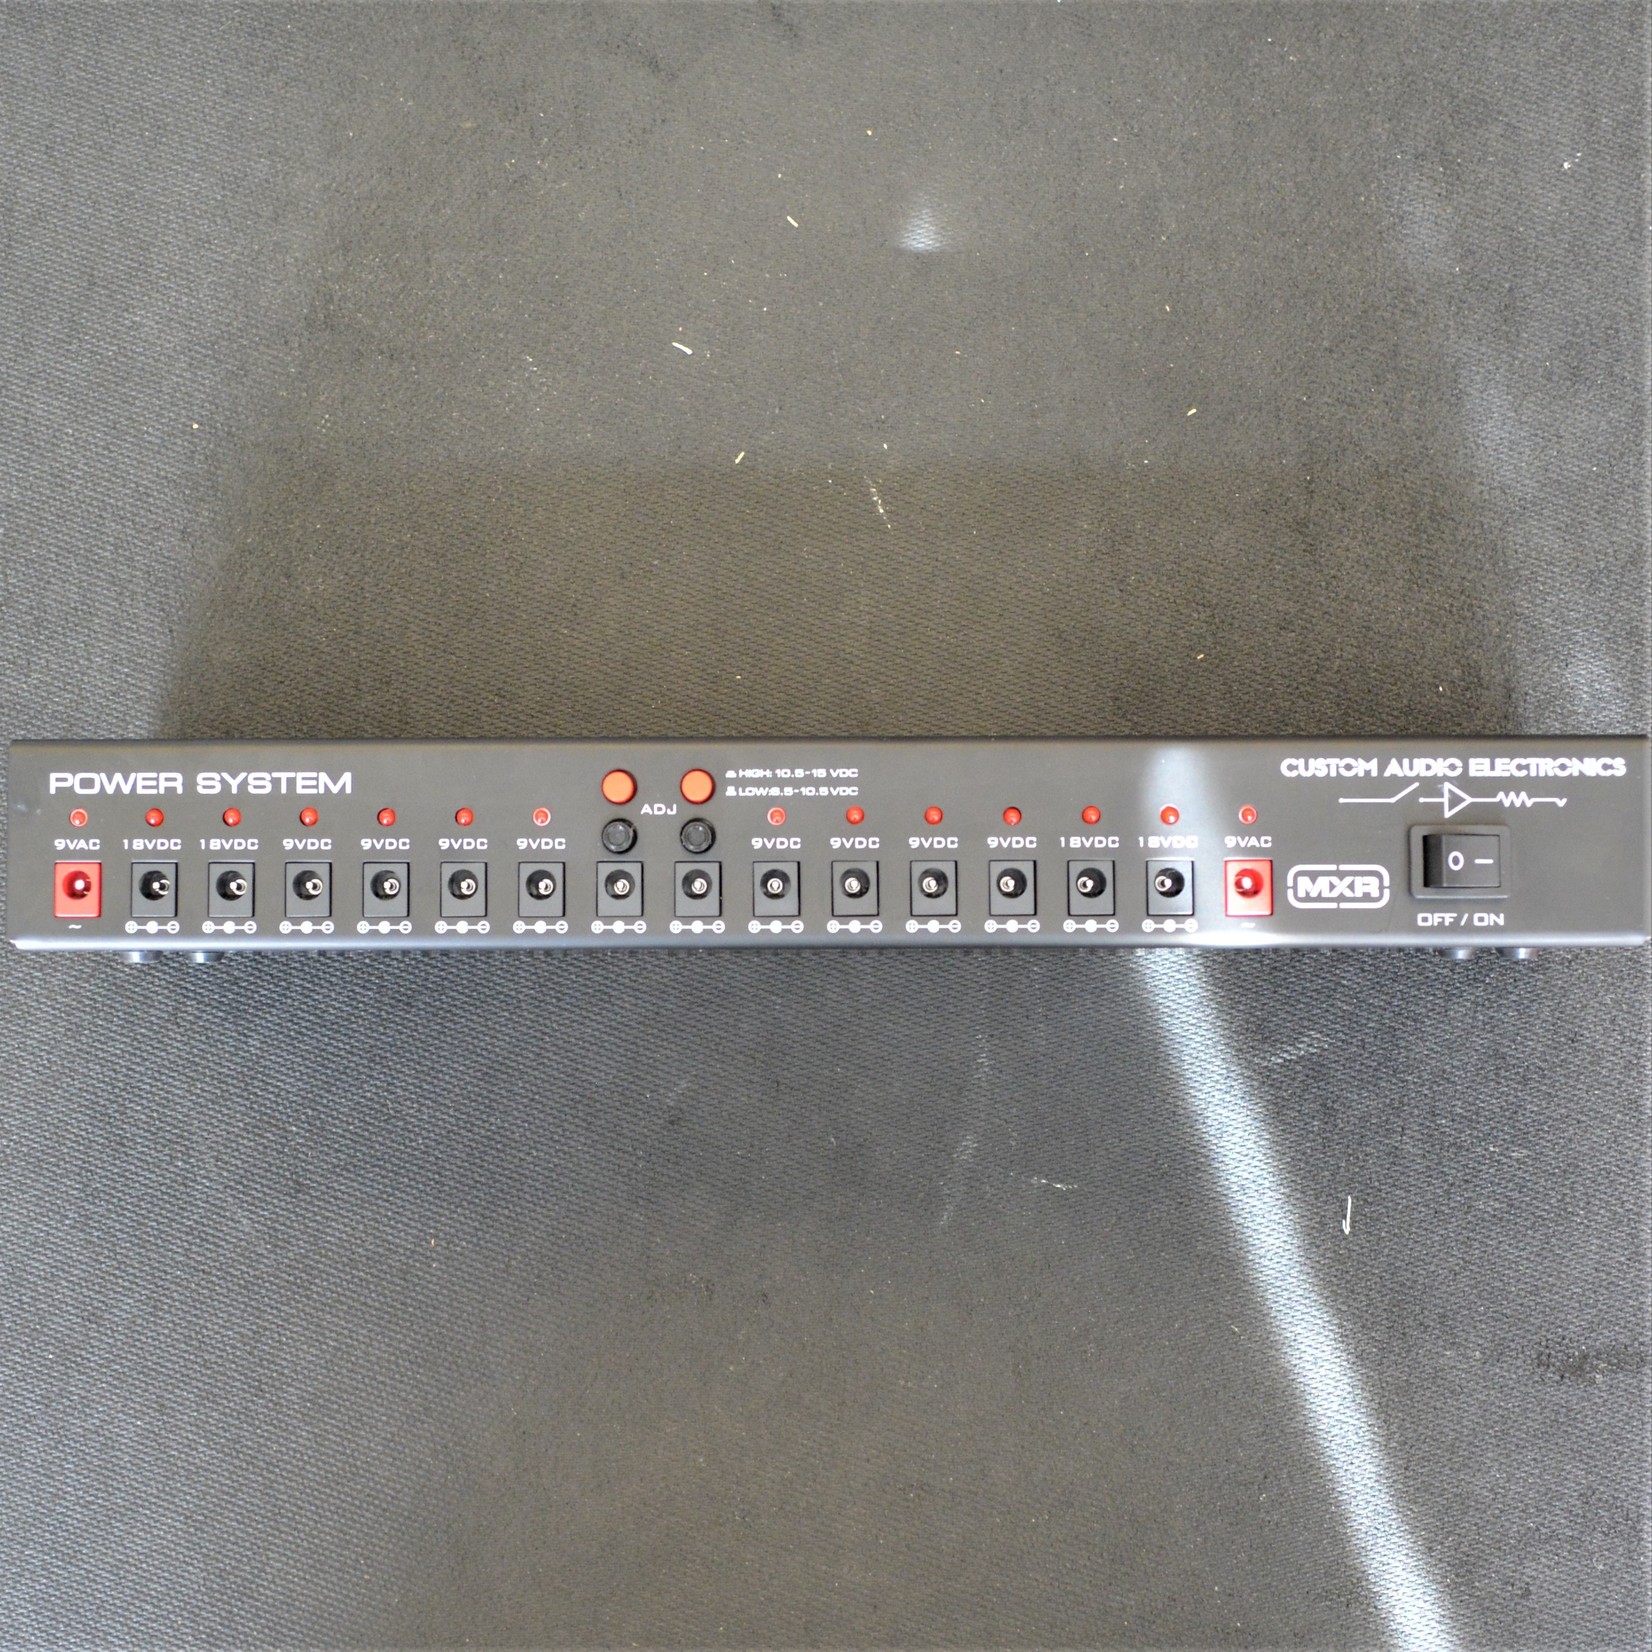 MXR MXR Custom Audio Electronics Power System MC403